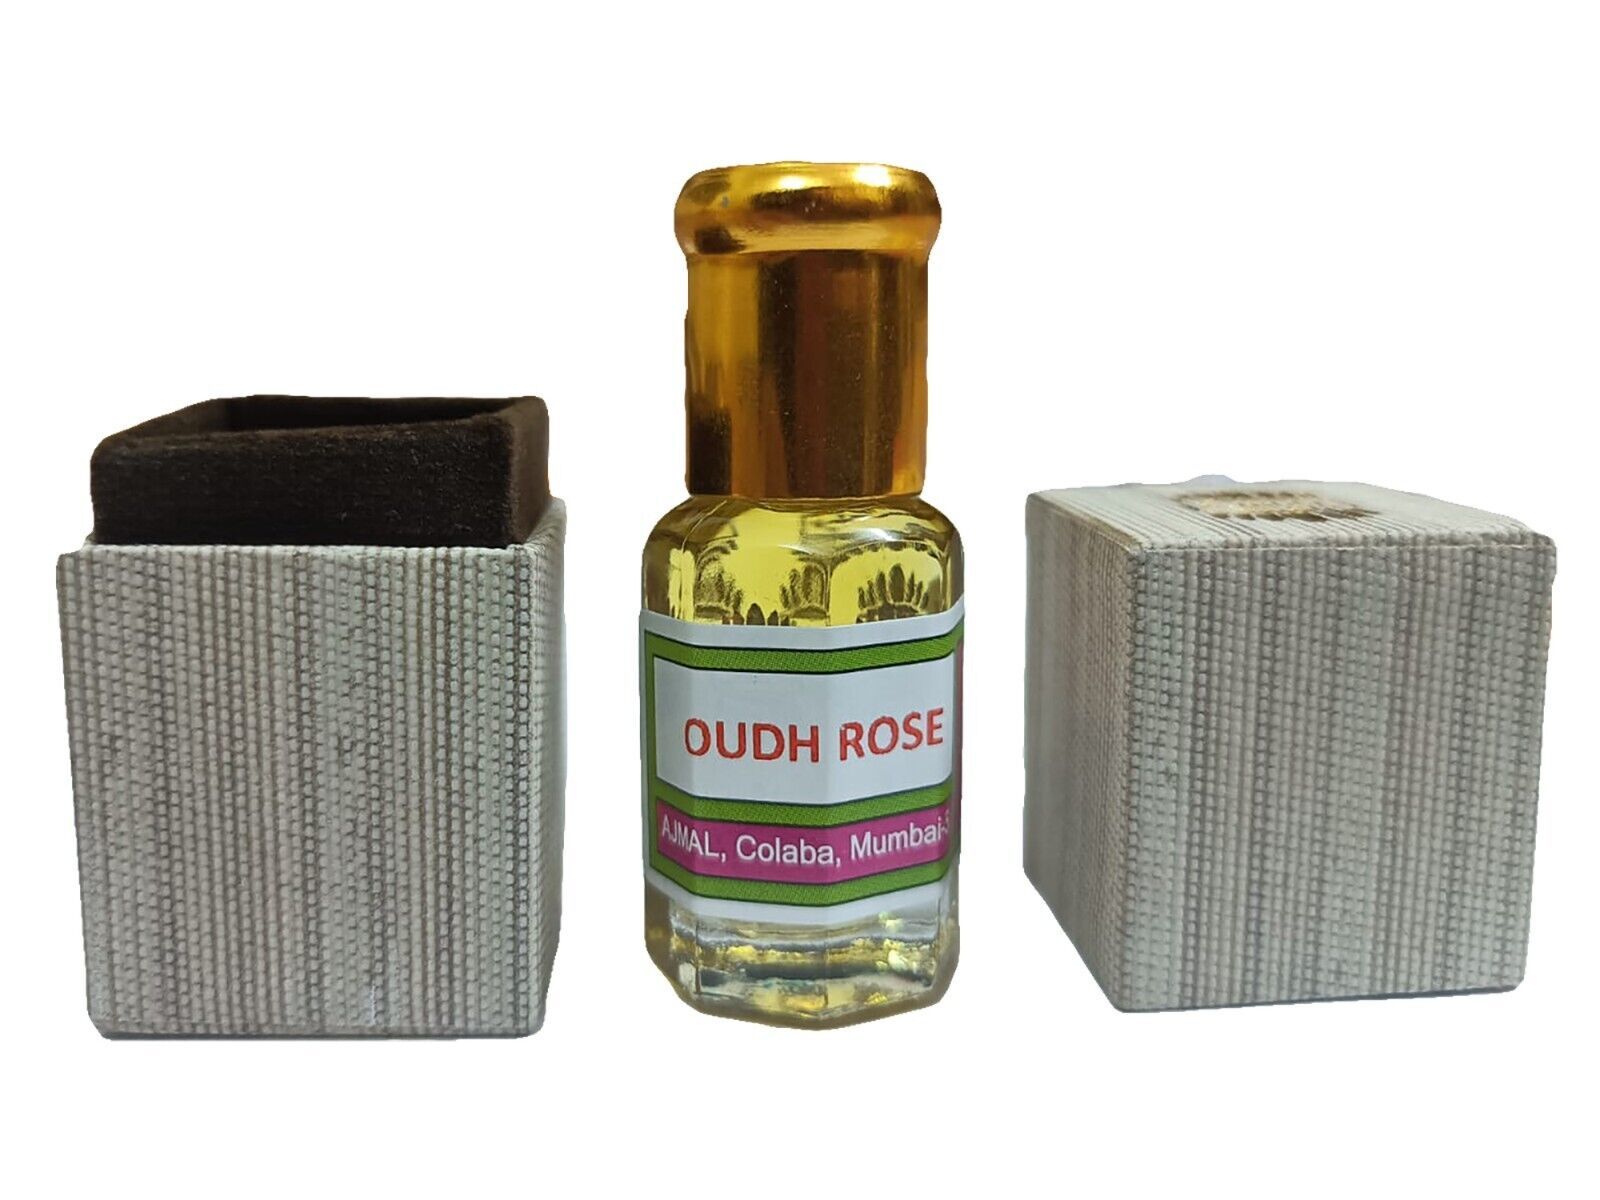 Oudh Rose by Ajmal CPO 6ml Attar Oil with Box Free Shipping - $57.42